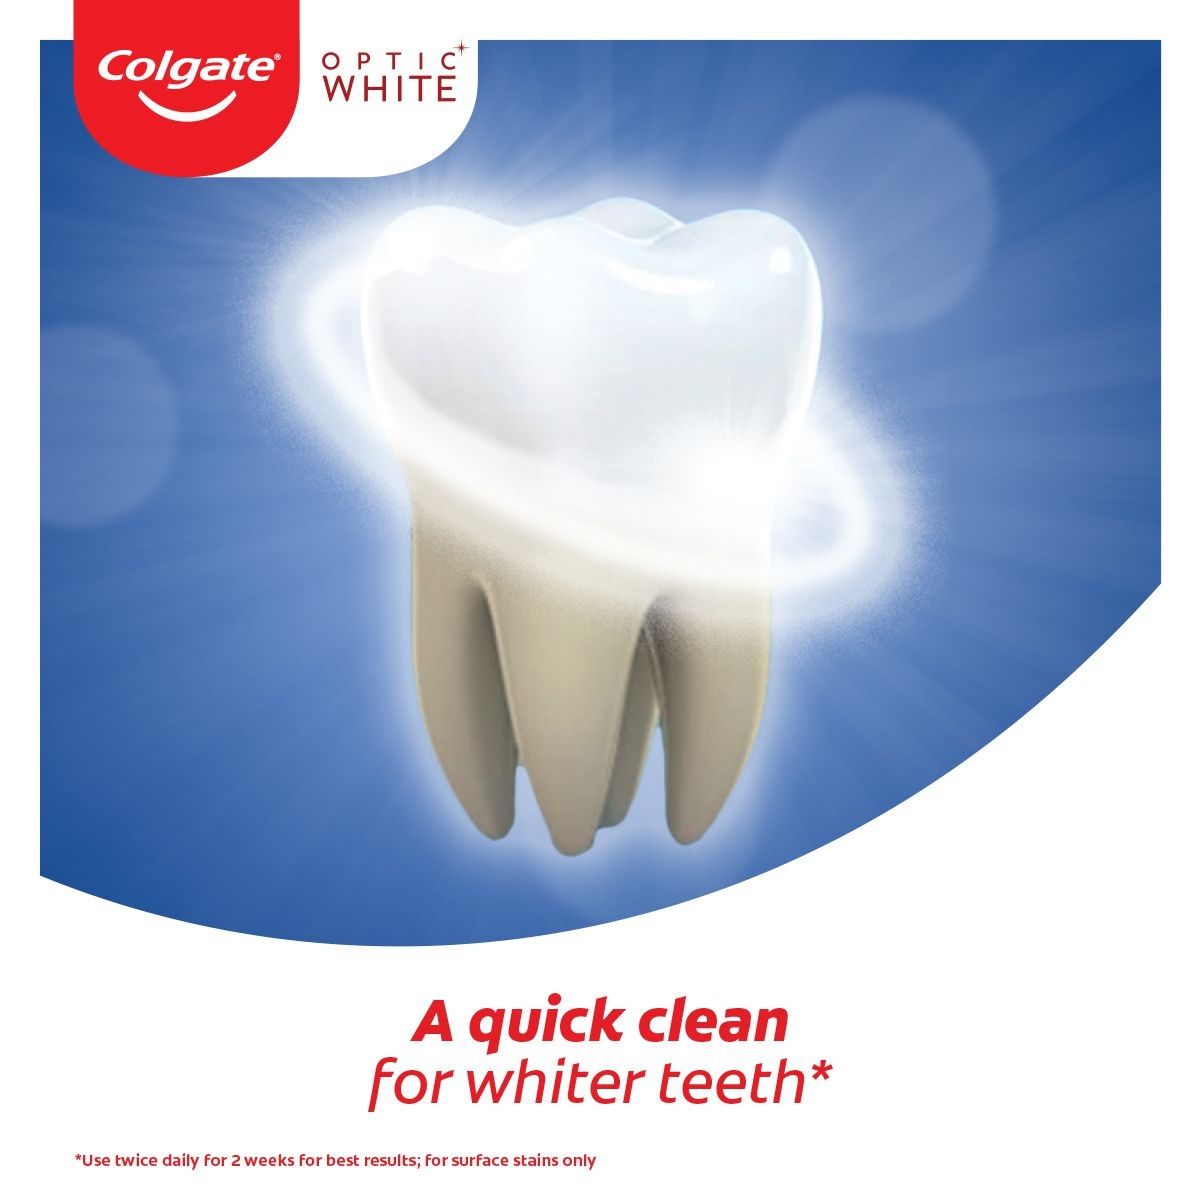 Colgate Optic White Instant Teeth Whitening Toothpaste,75ml